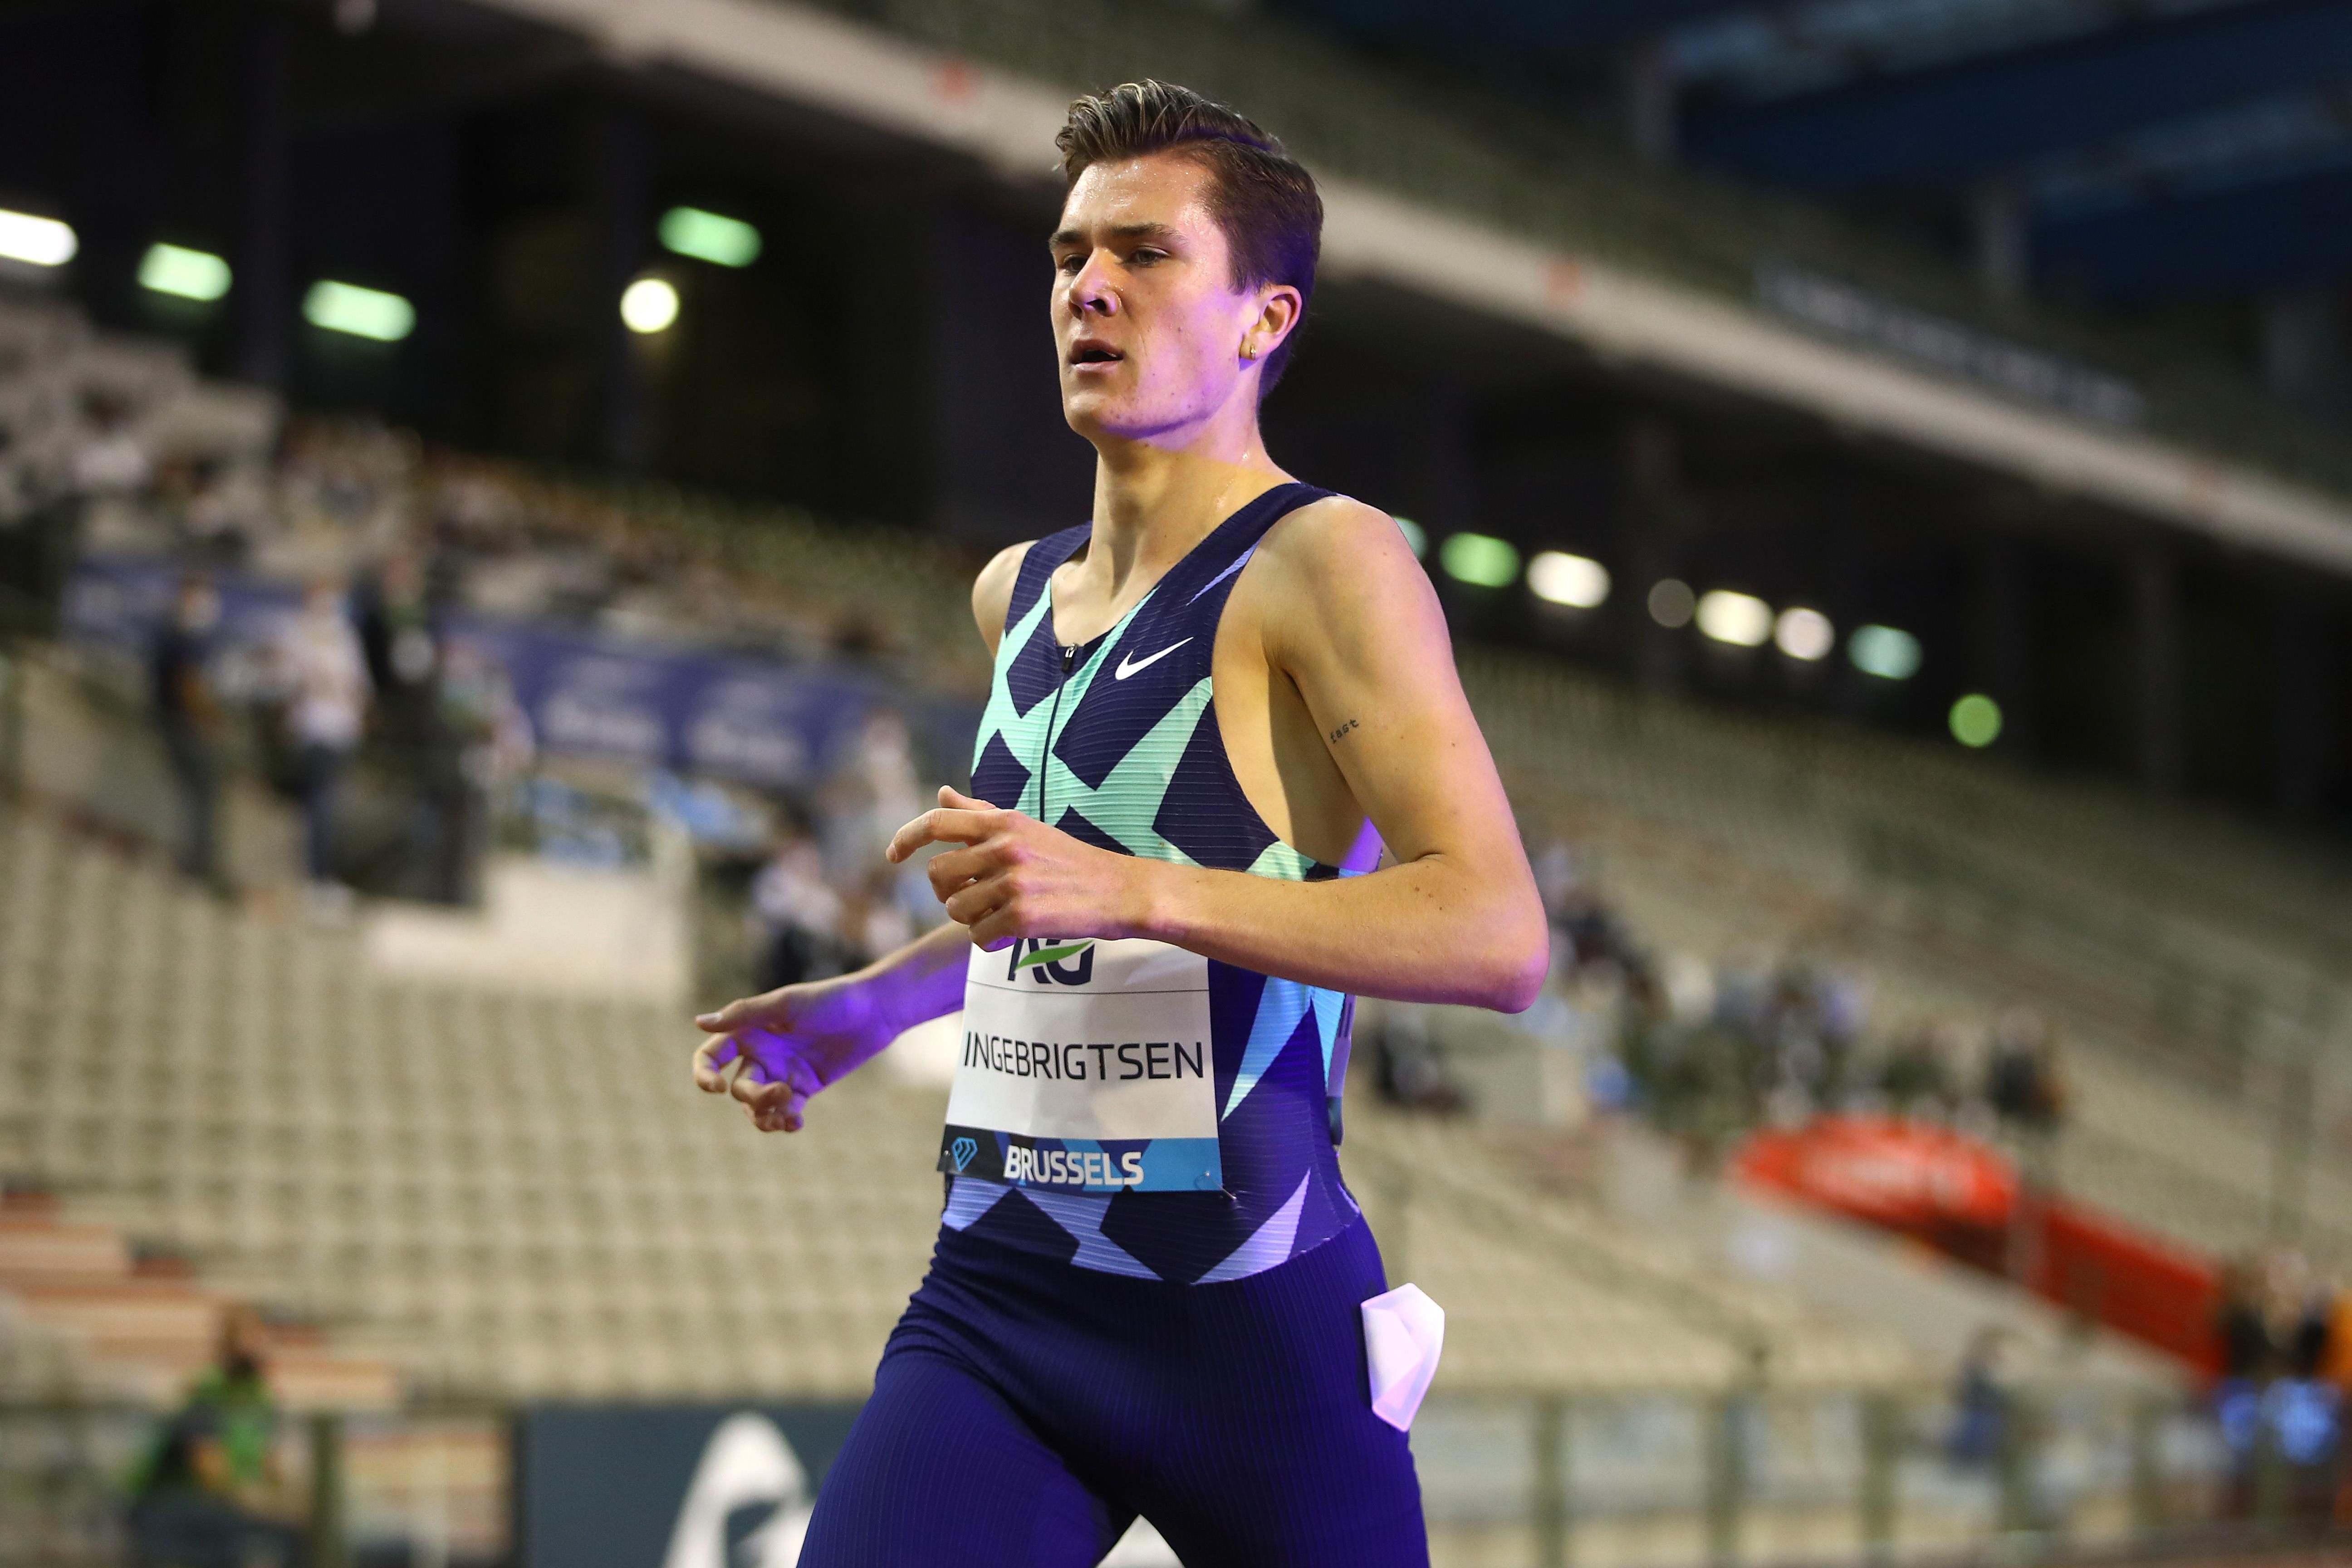 Jakob Ingebrigtsen wins the 1500m at the Diamond League meeting in Brussels